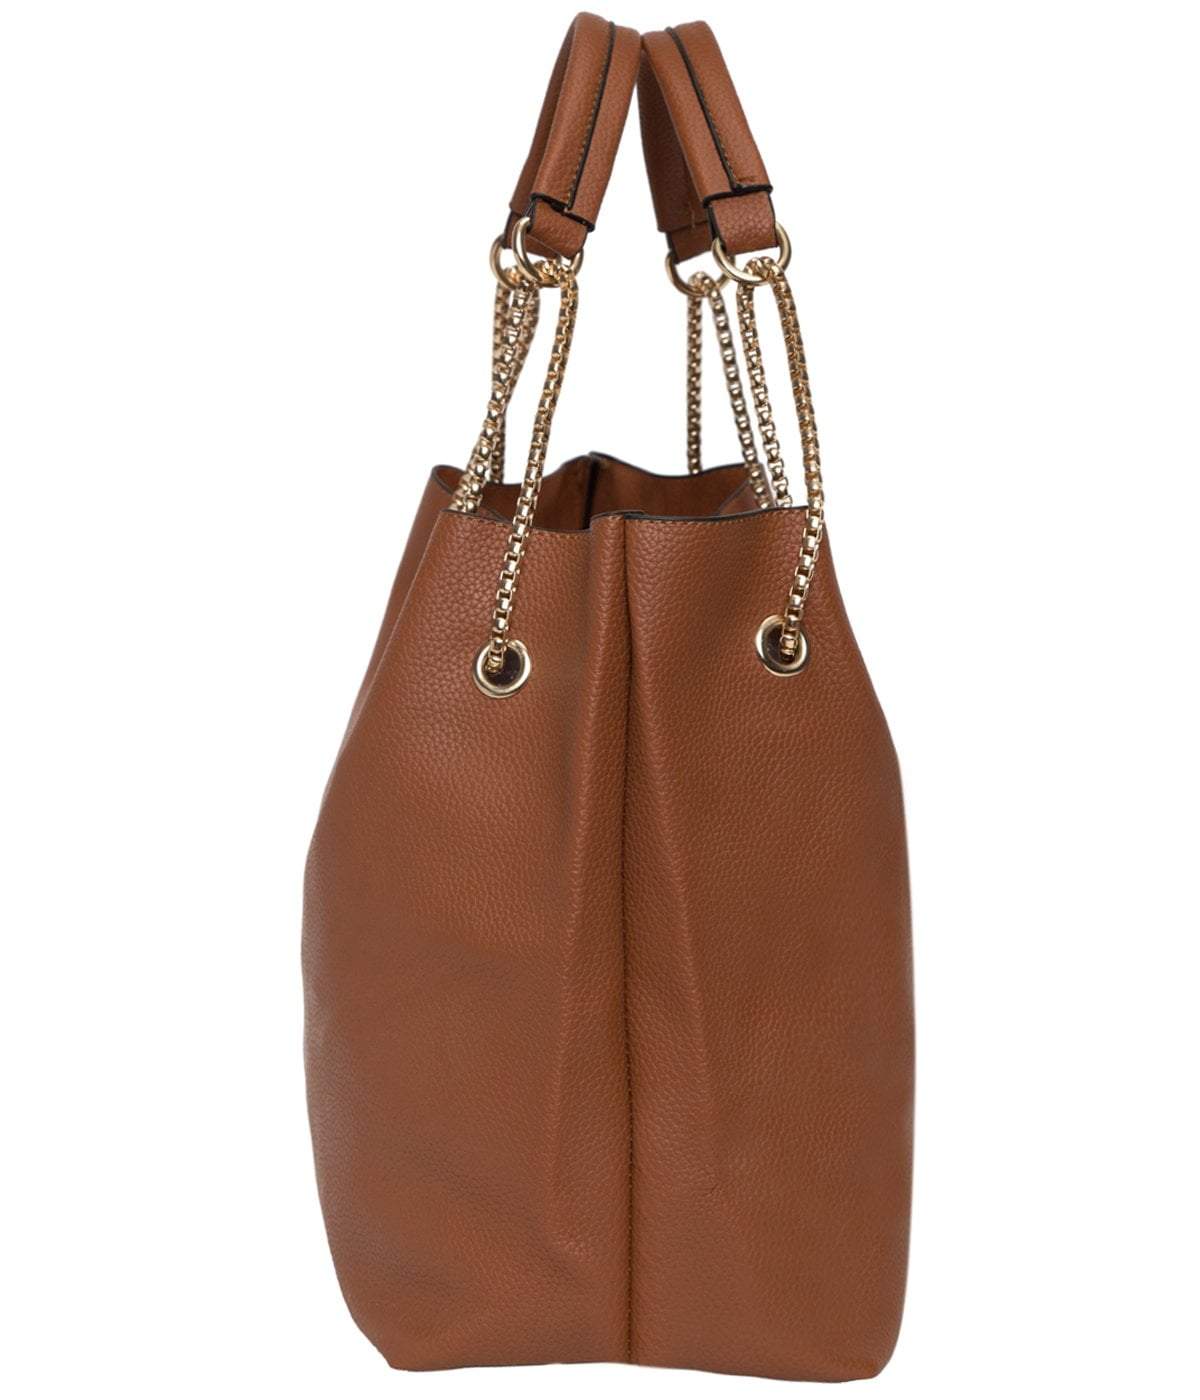 kinnoti Handbags Black color Chain Tote Bag